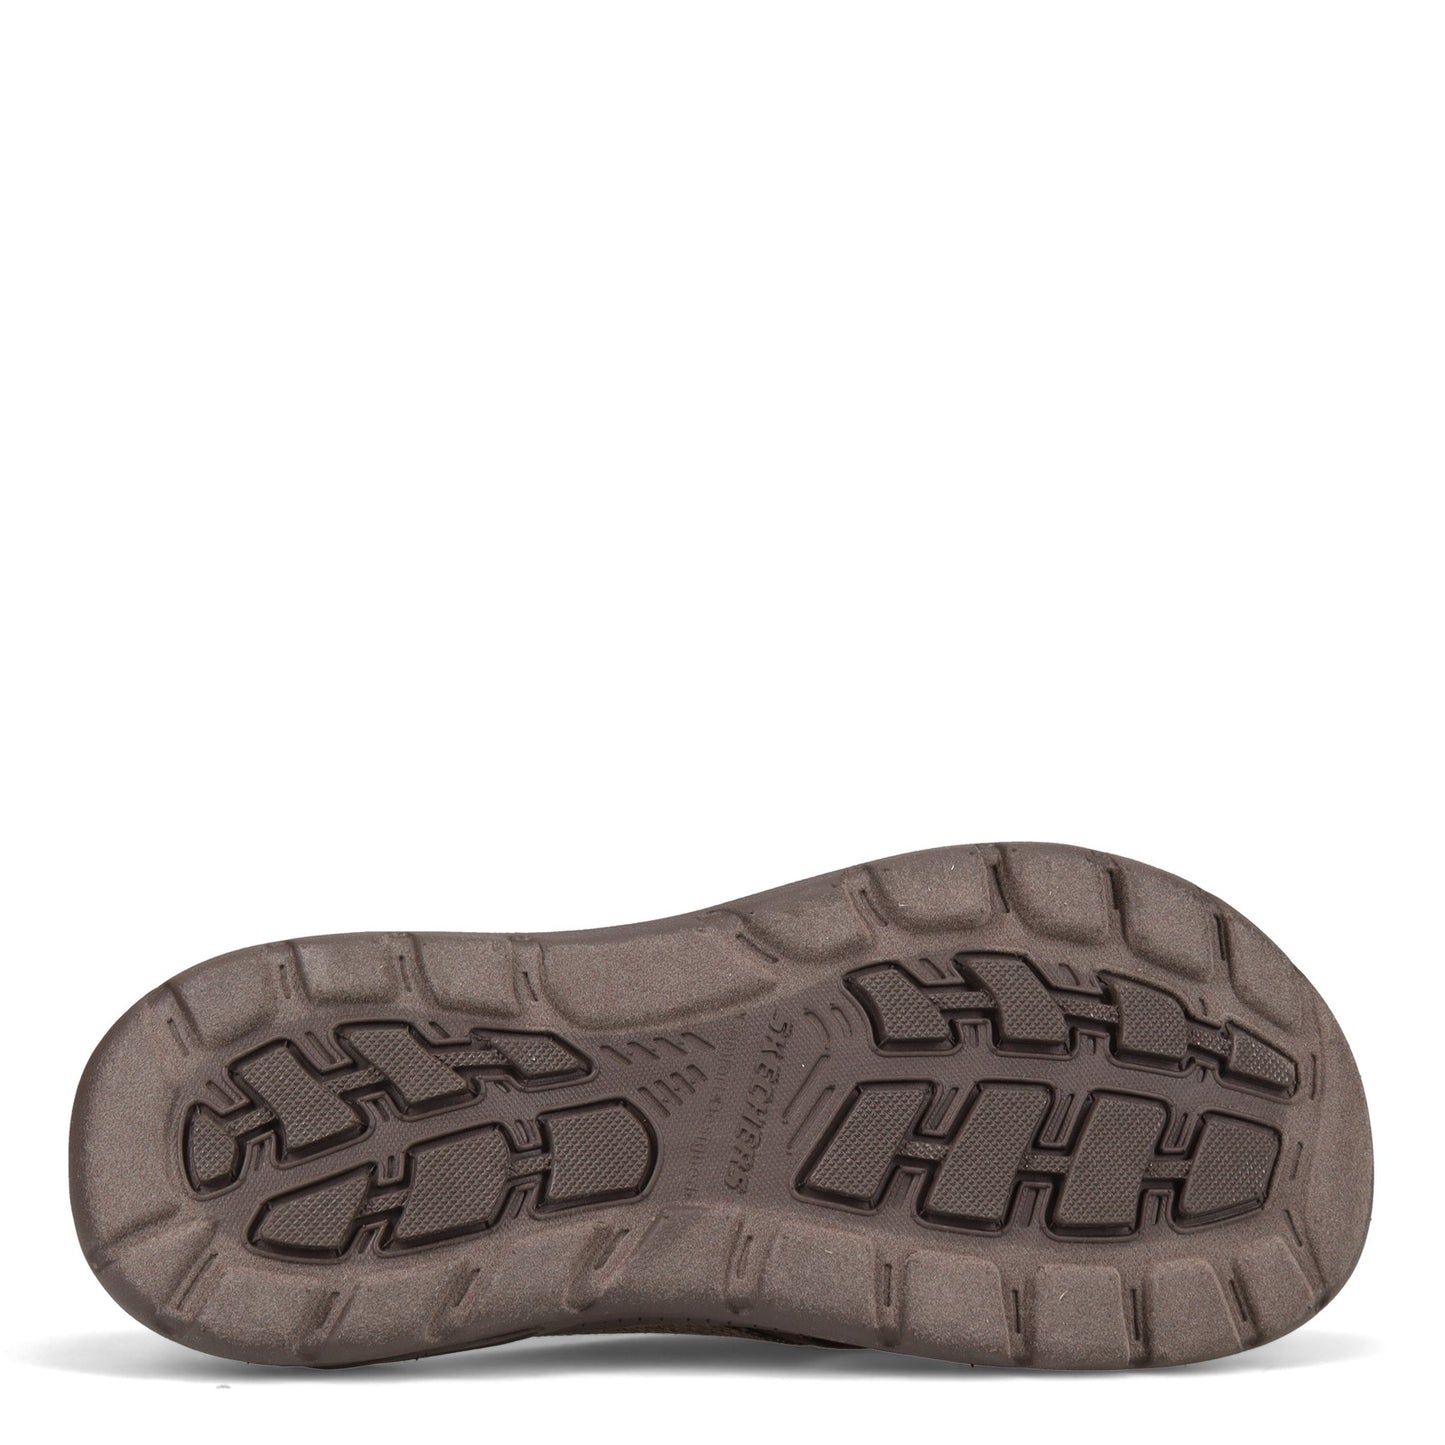 Peltz Shoes  Men's Skechers Arch Fit Motley SD - Dolano Sandal - Wide Width CHOCOLATE 204345WW-CHOC